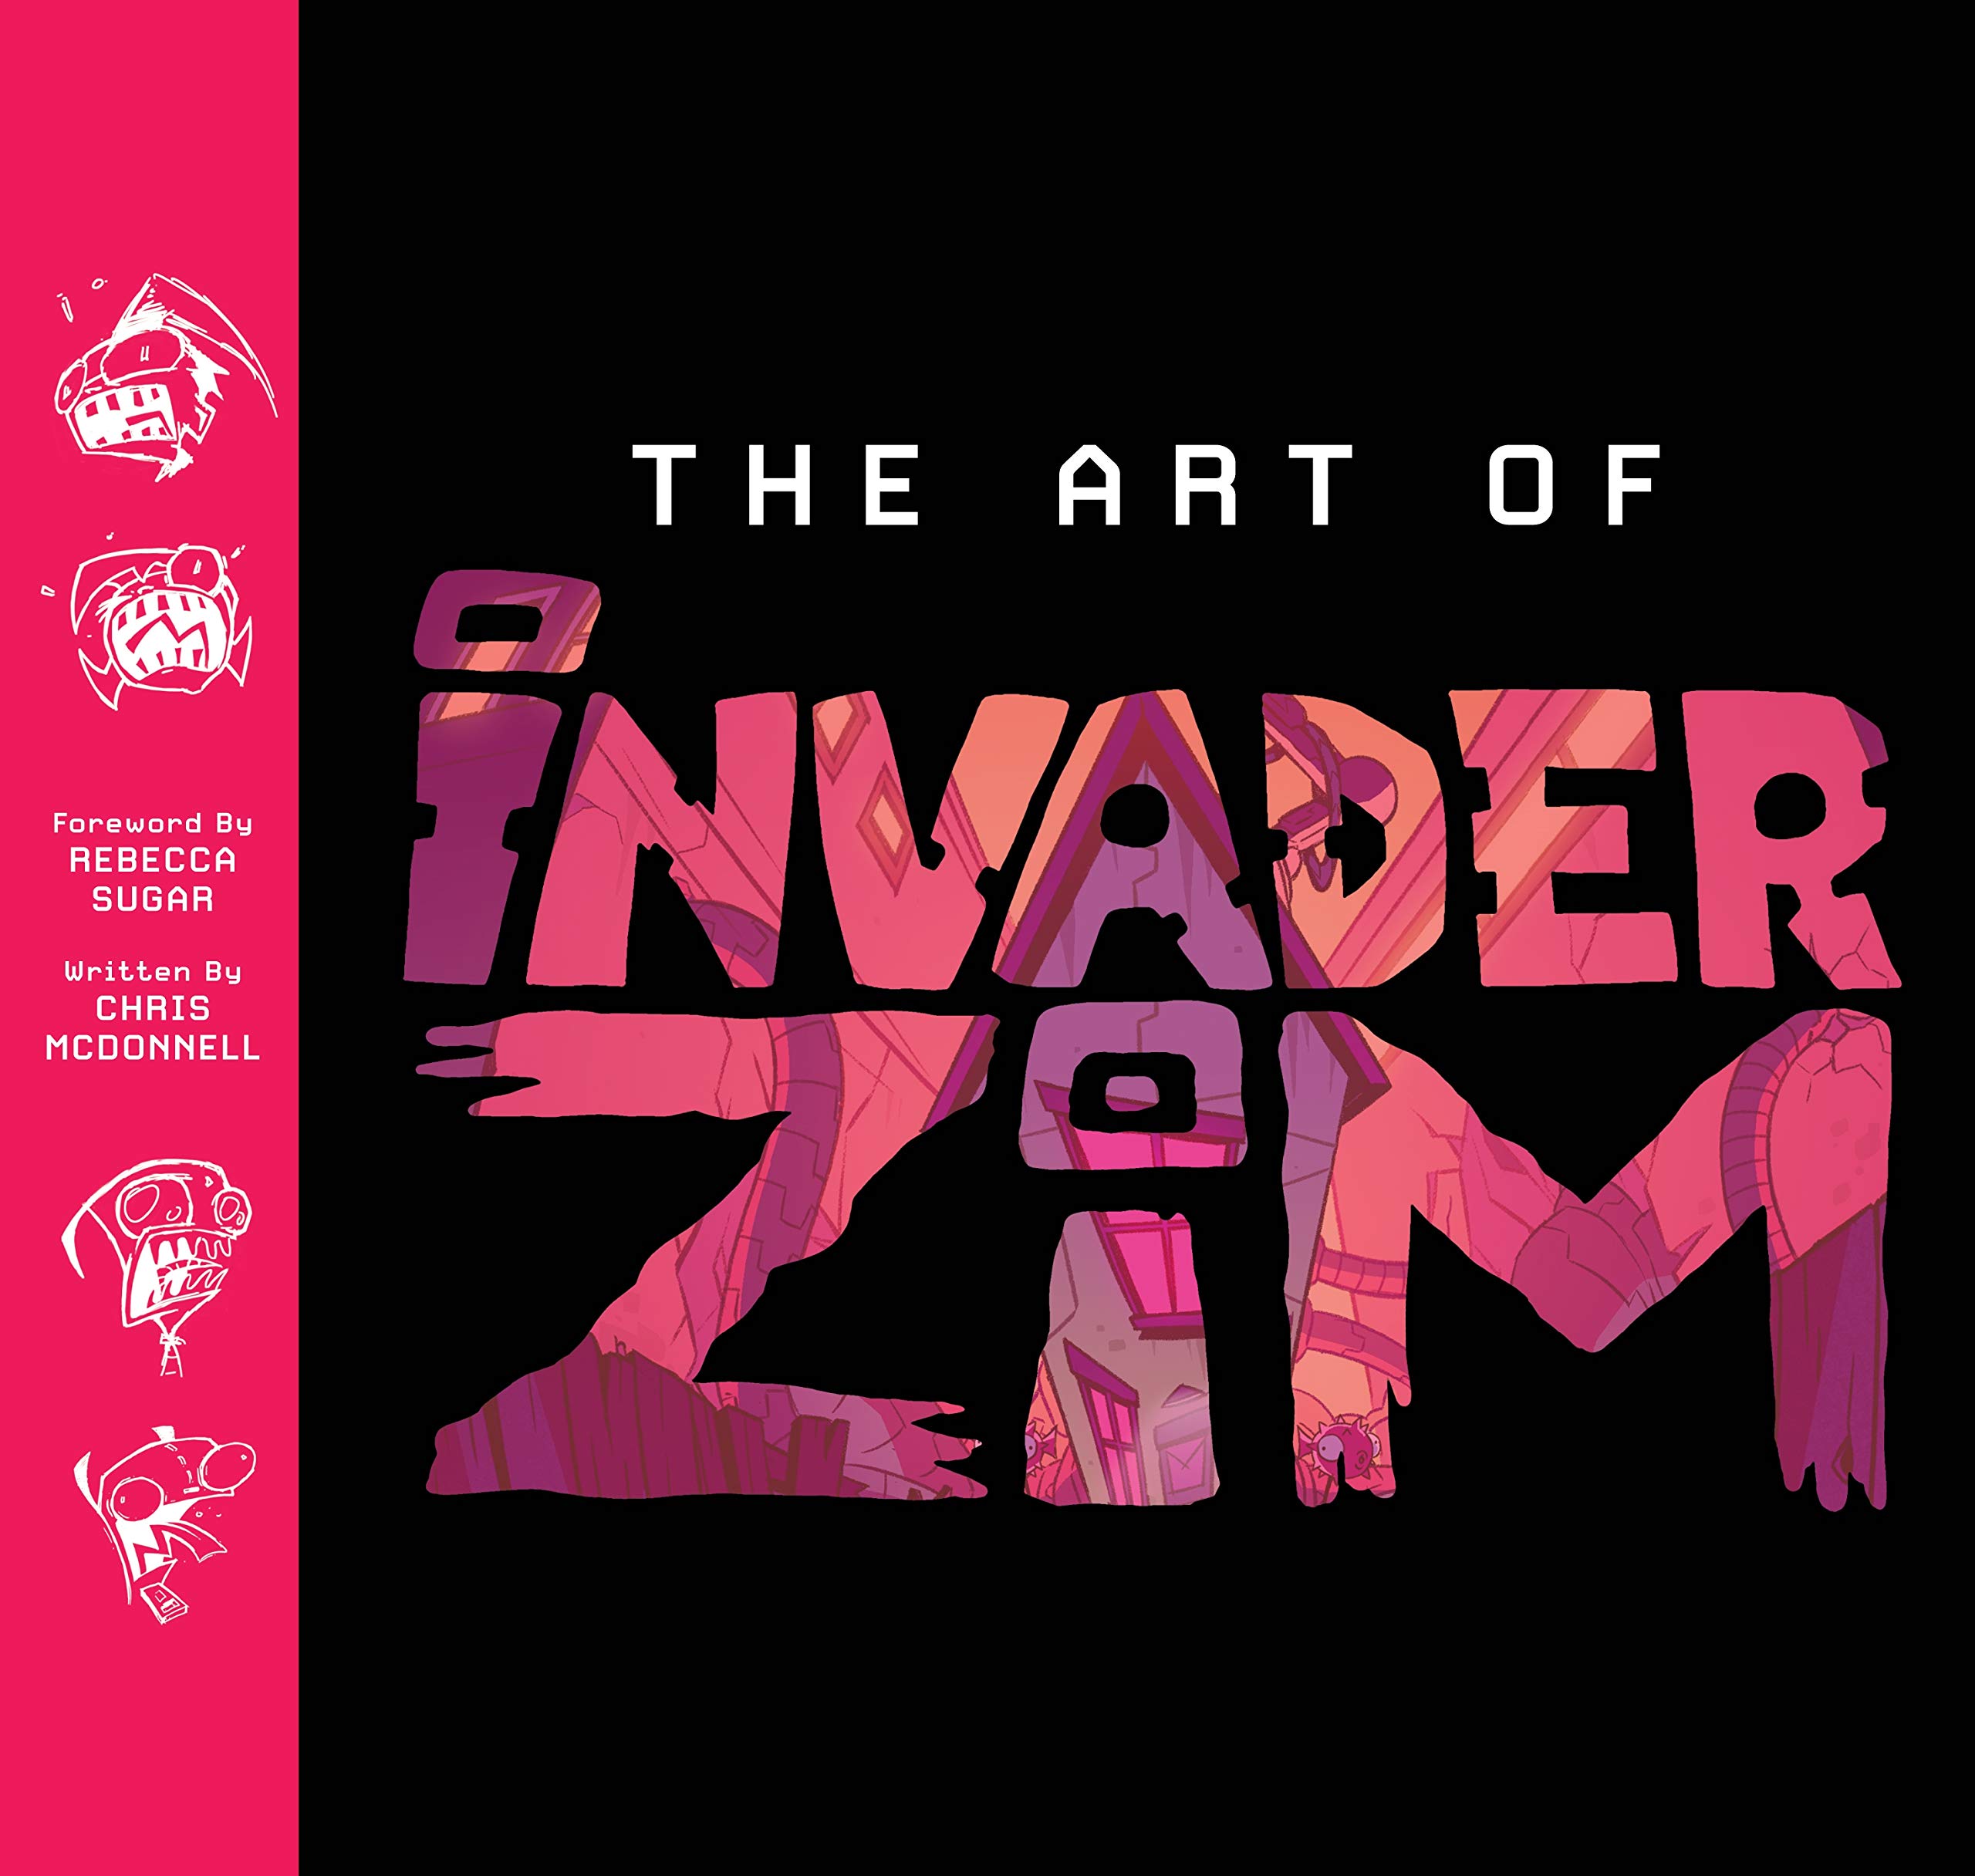 DOOM DOOM DOOM: The Art of Invader Zim by Chris McDonnell